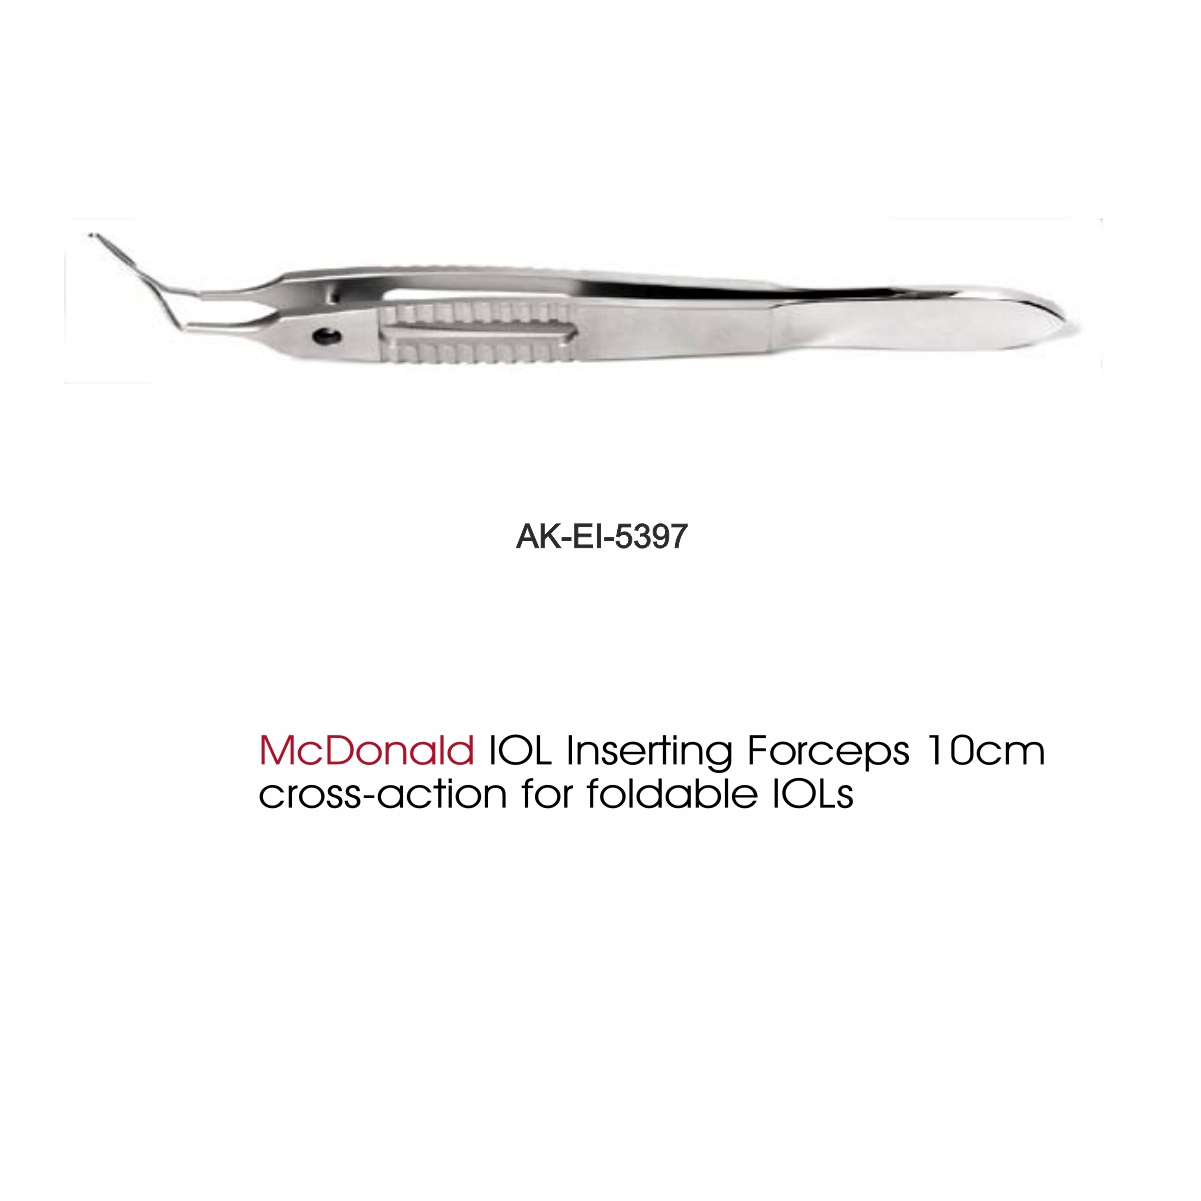 McDonald IOL Inserting Forceps